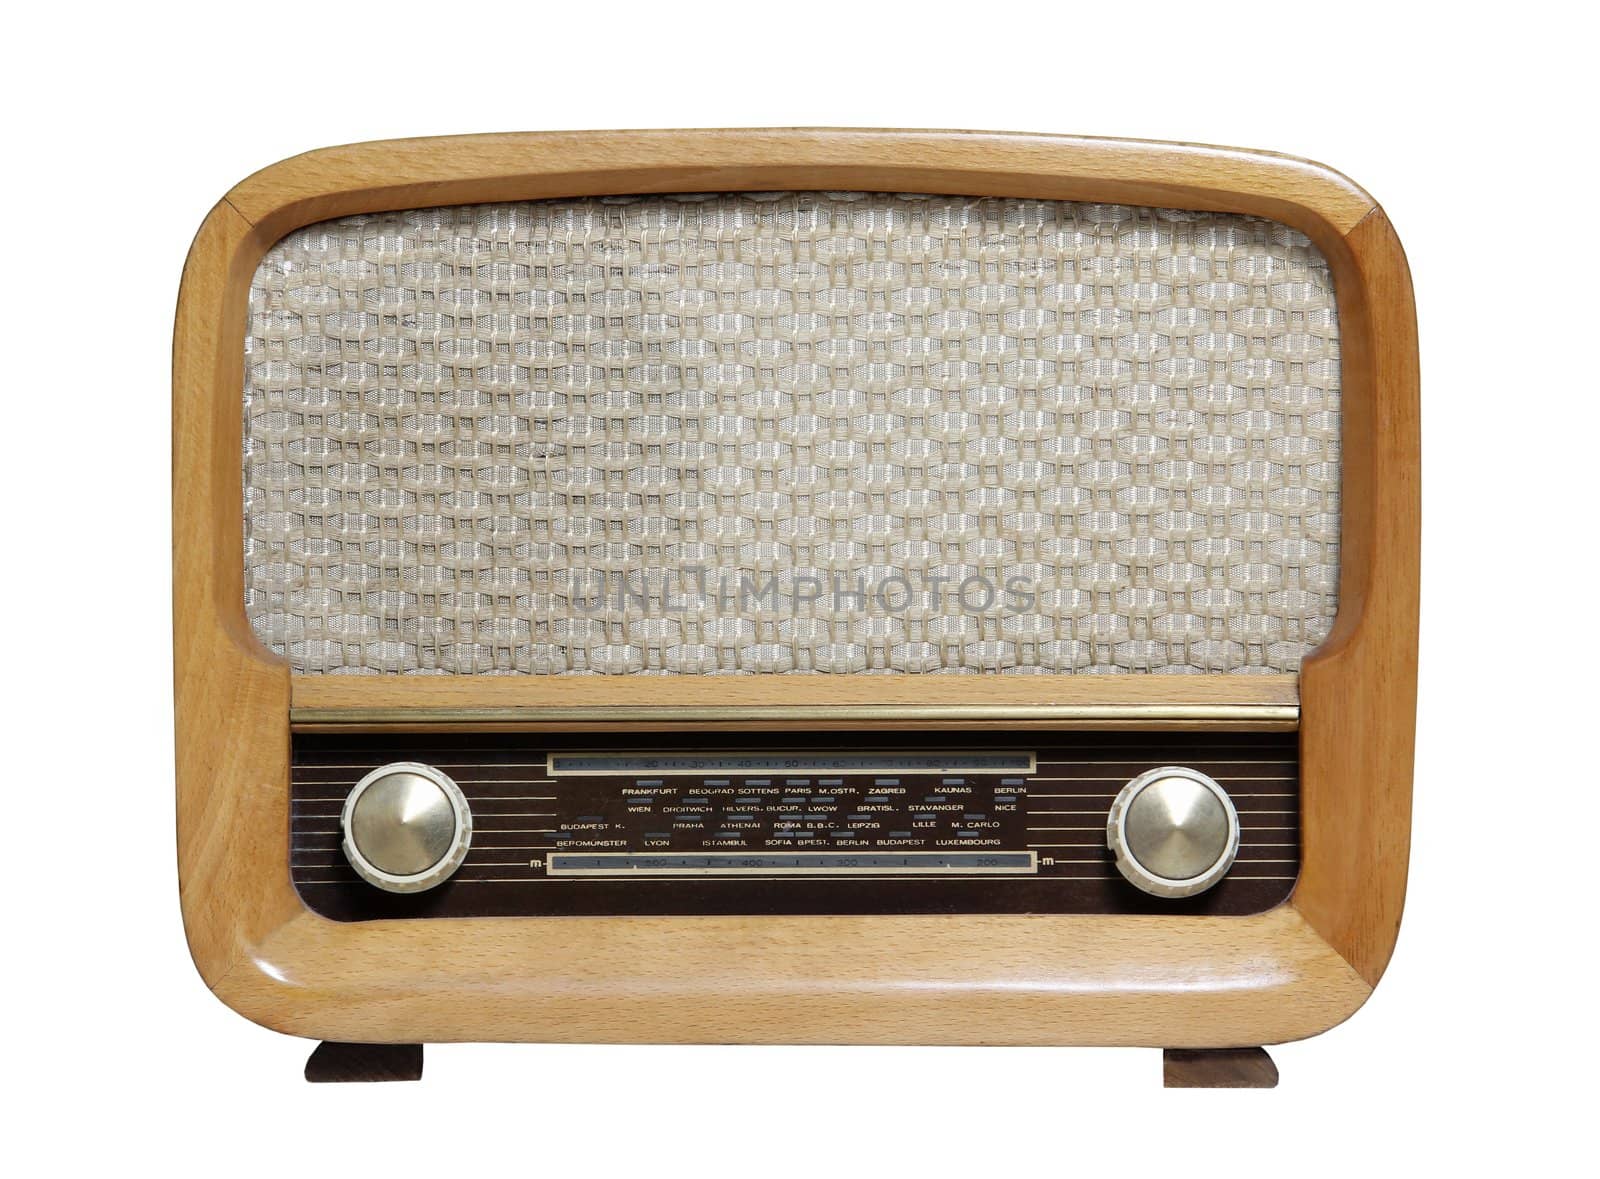 vintage radio isolated on the white background